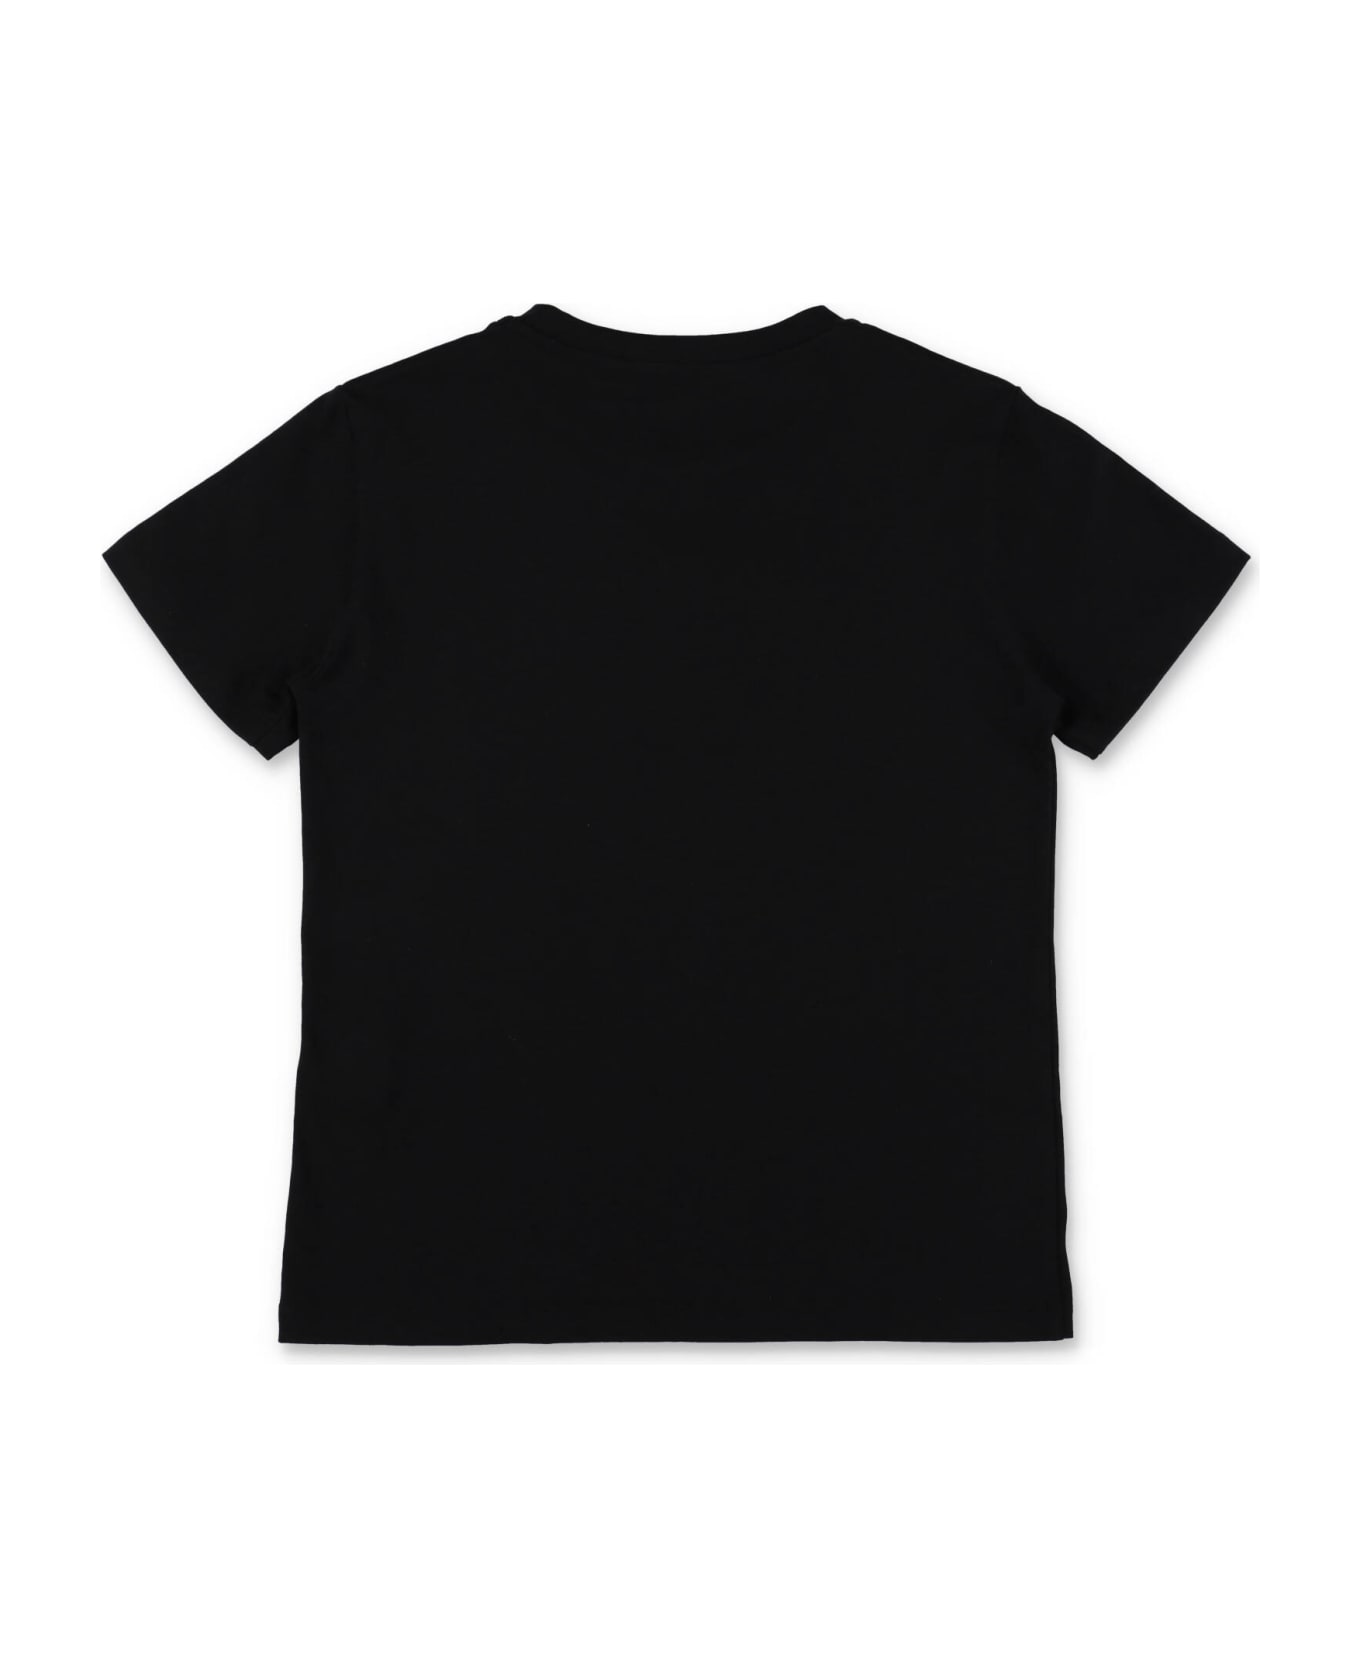 Versace T-shirt Nera In Jersey Di Cotone - Nero Tシャツ＆ポロシャツ